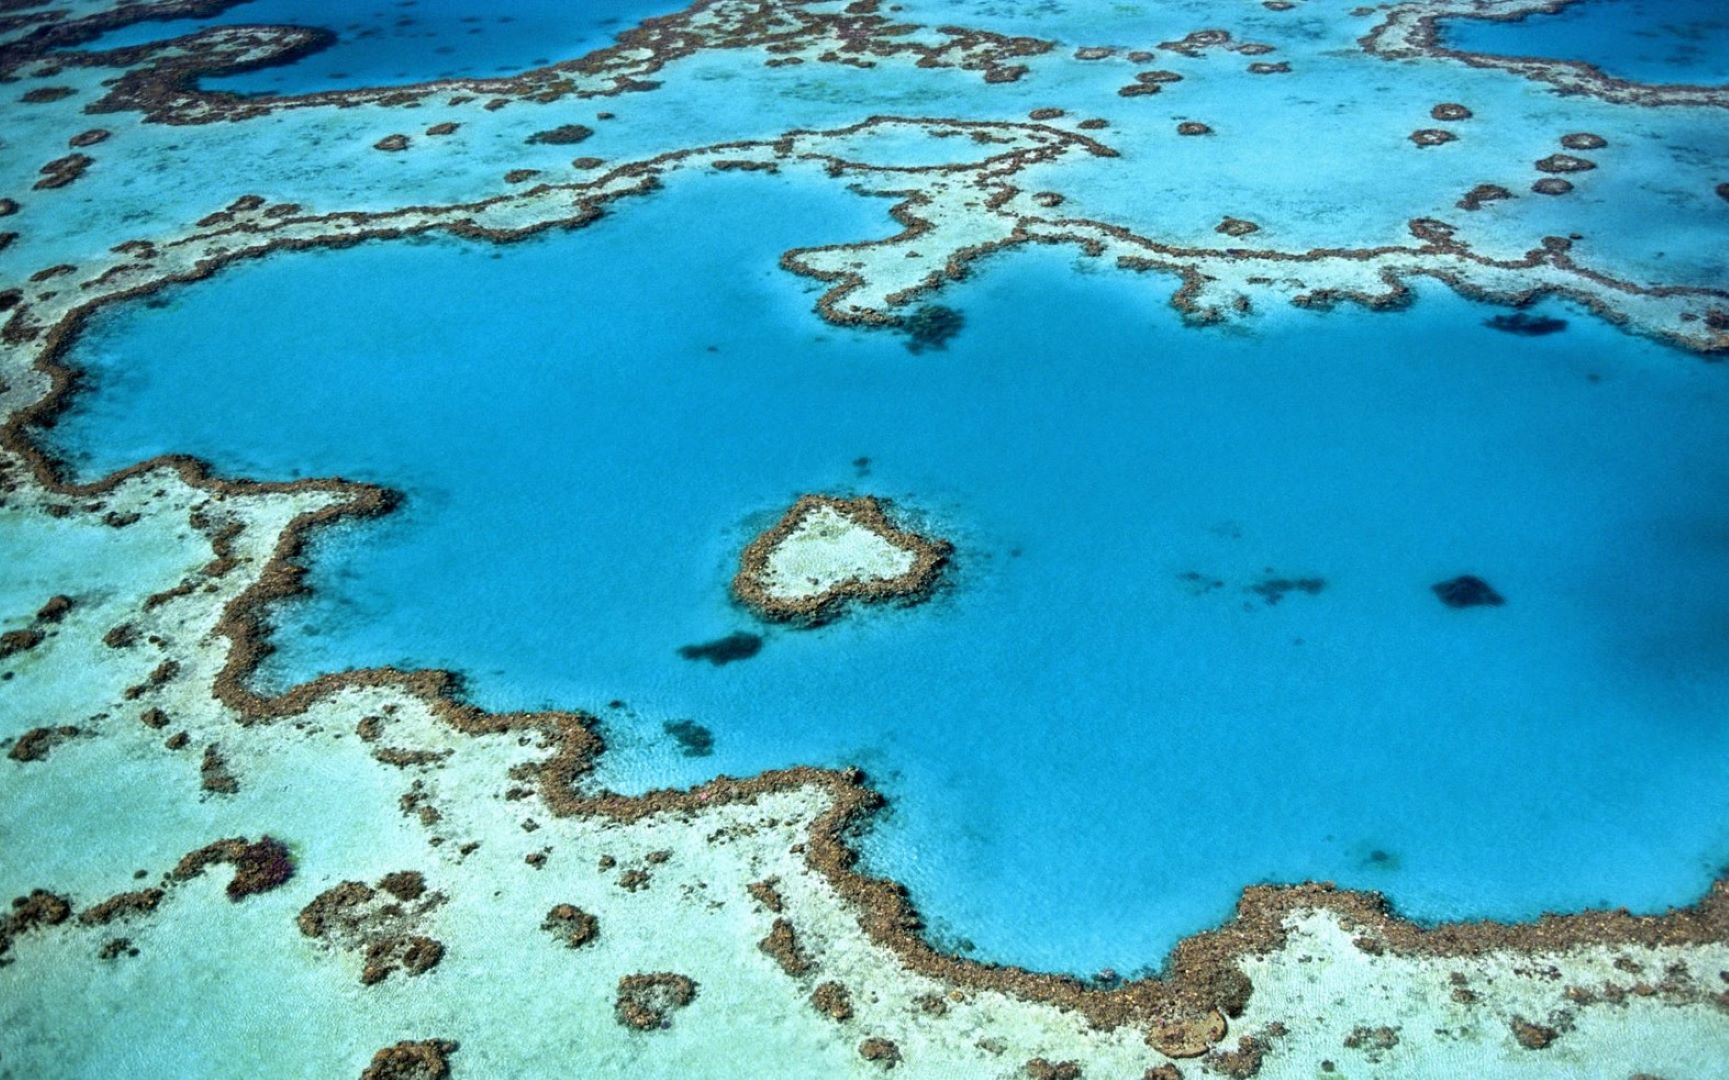 aerial view of coral reefs in the ocean